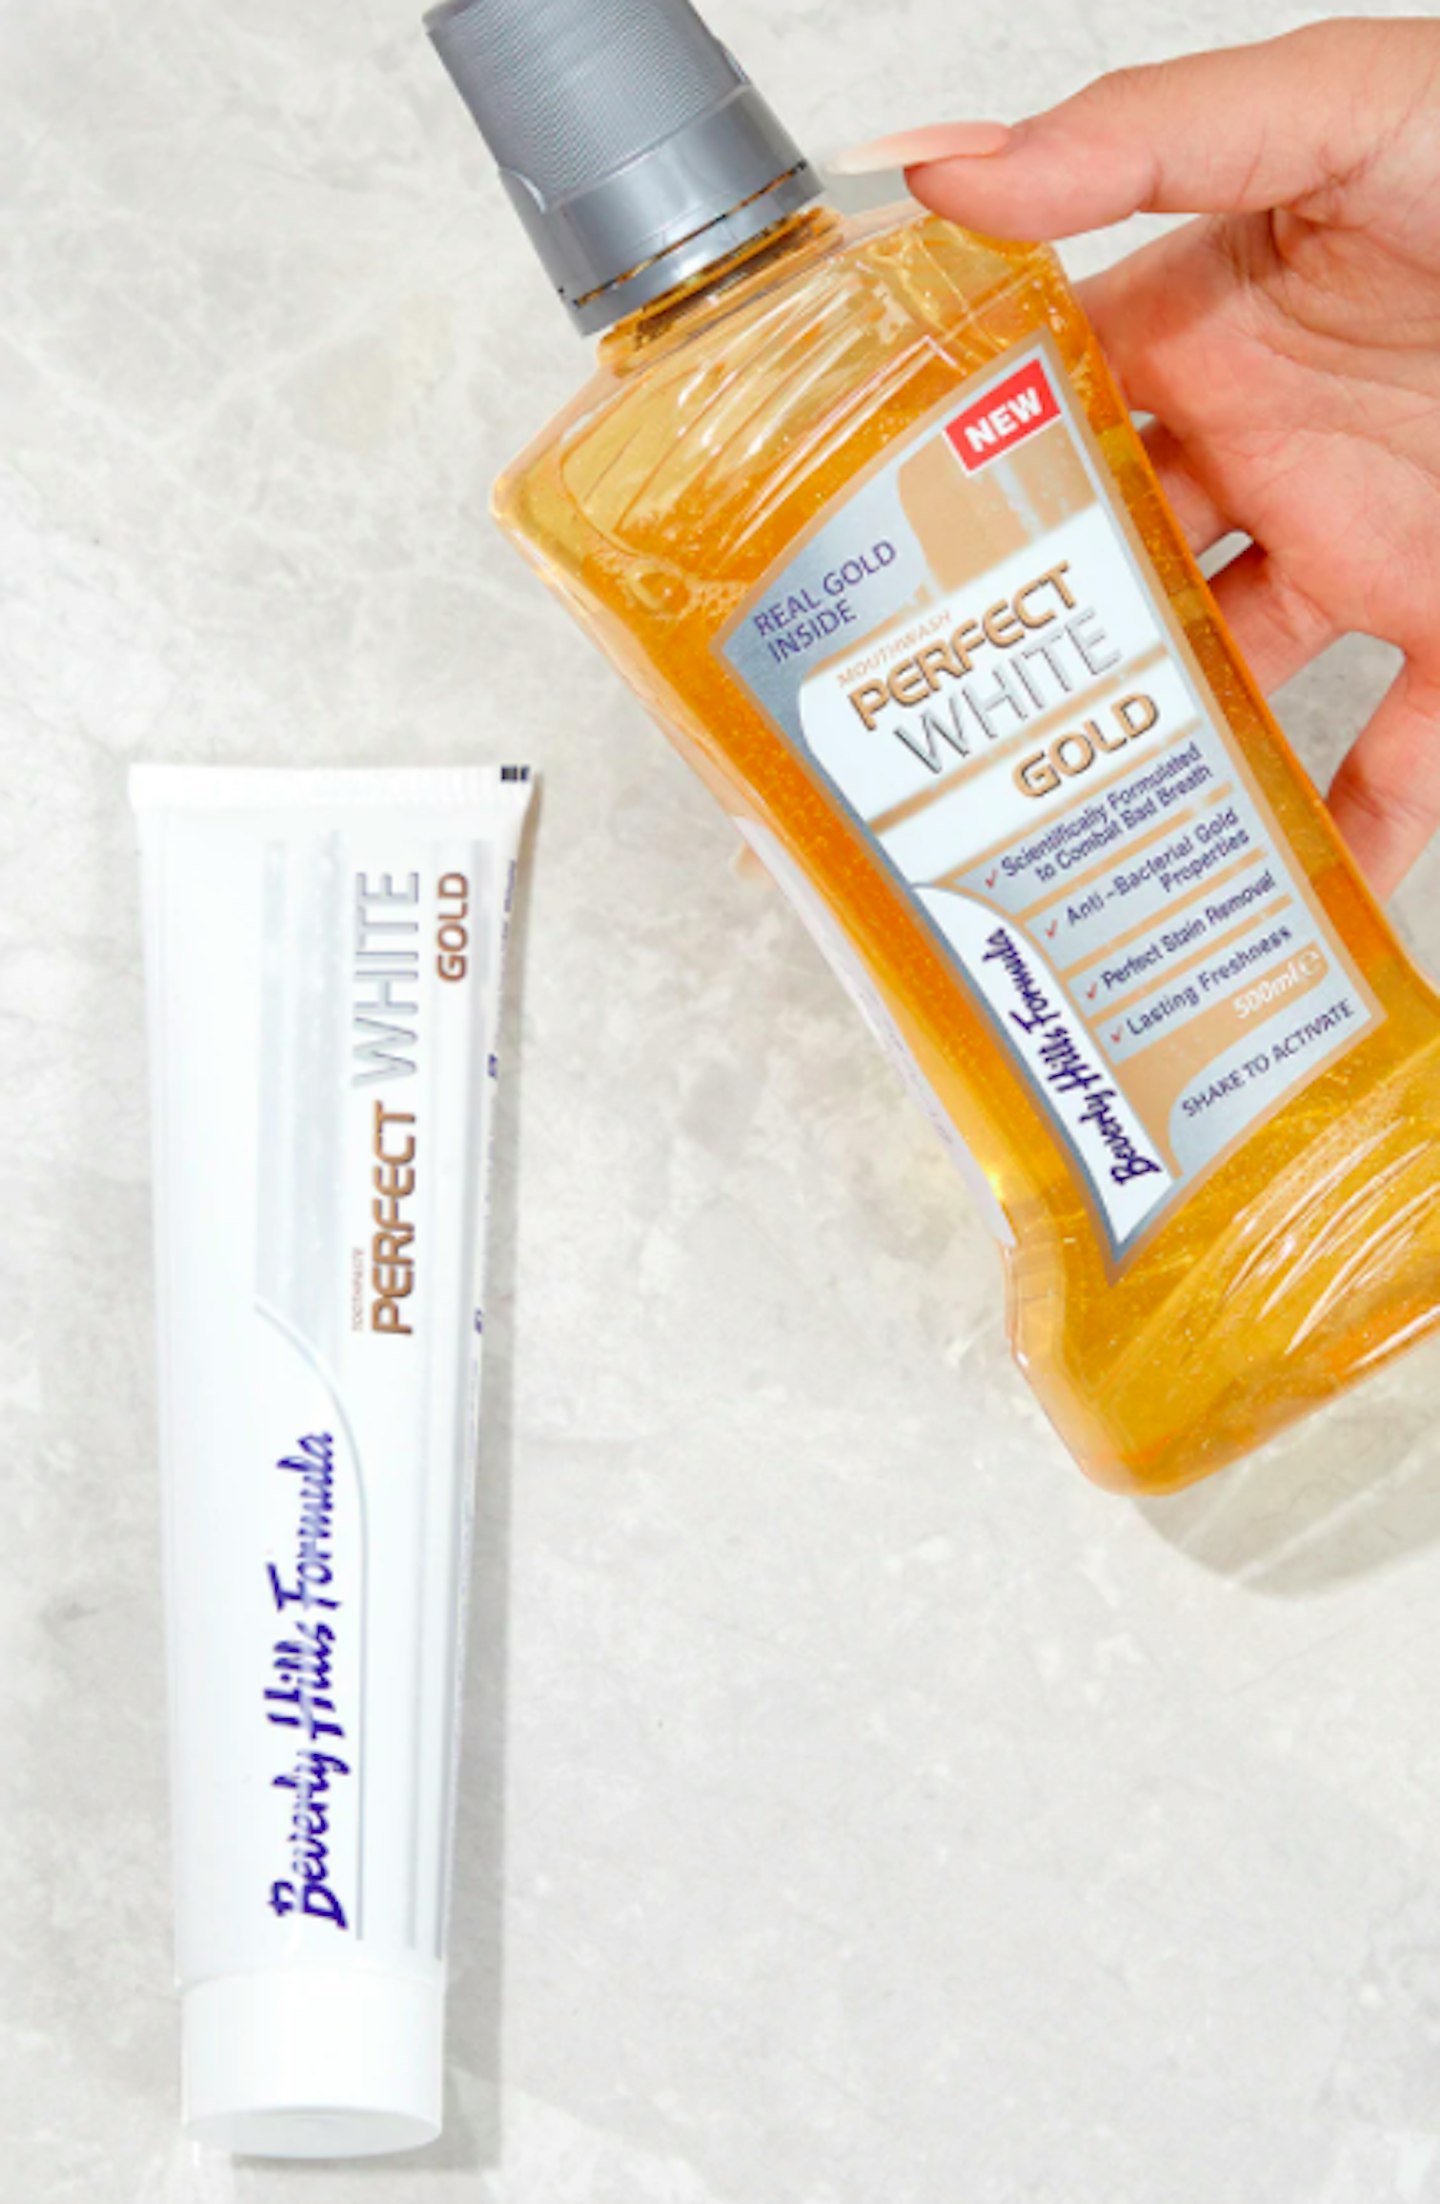 Beverly Hills Formula Perfect White Gold Toothpaste & Mouthwash Bundle